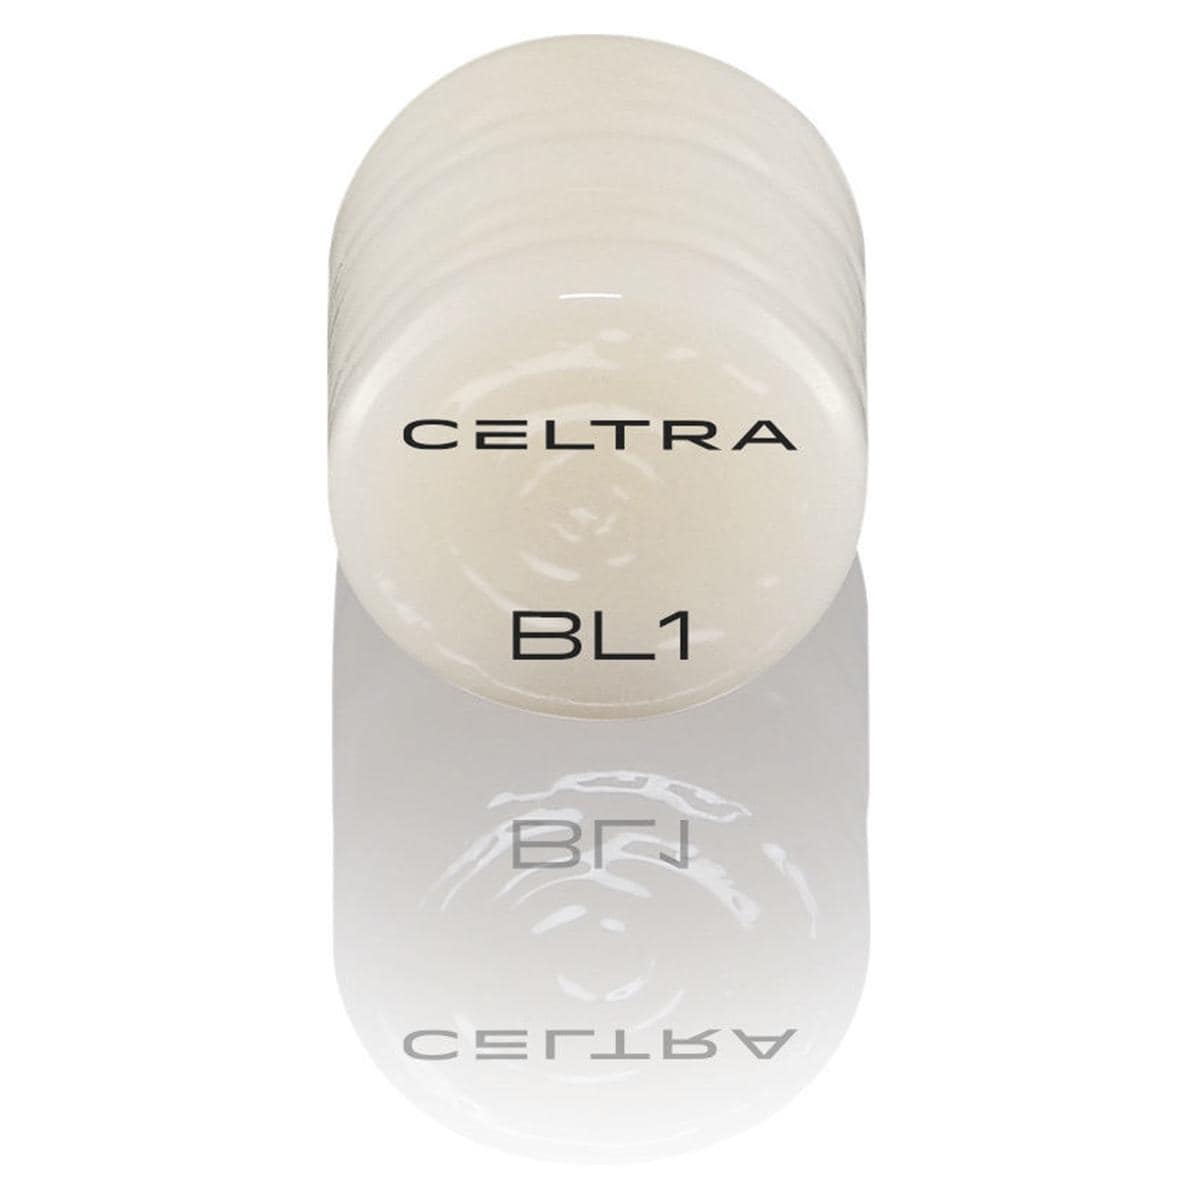 CELTRA Press LT/MT Bleach - BL1, 3x 6 g